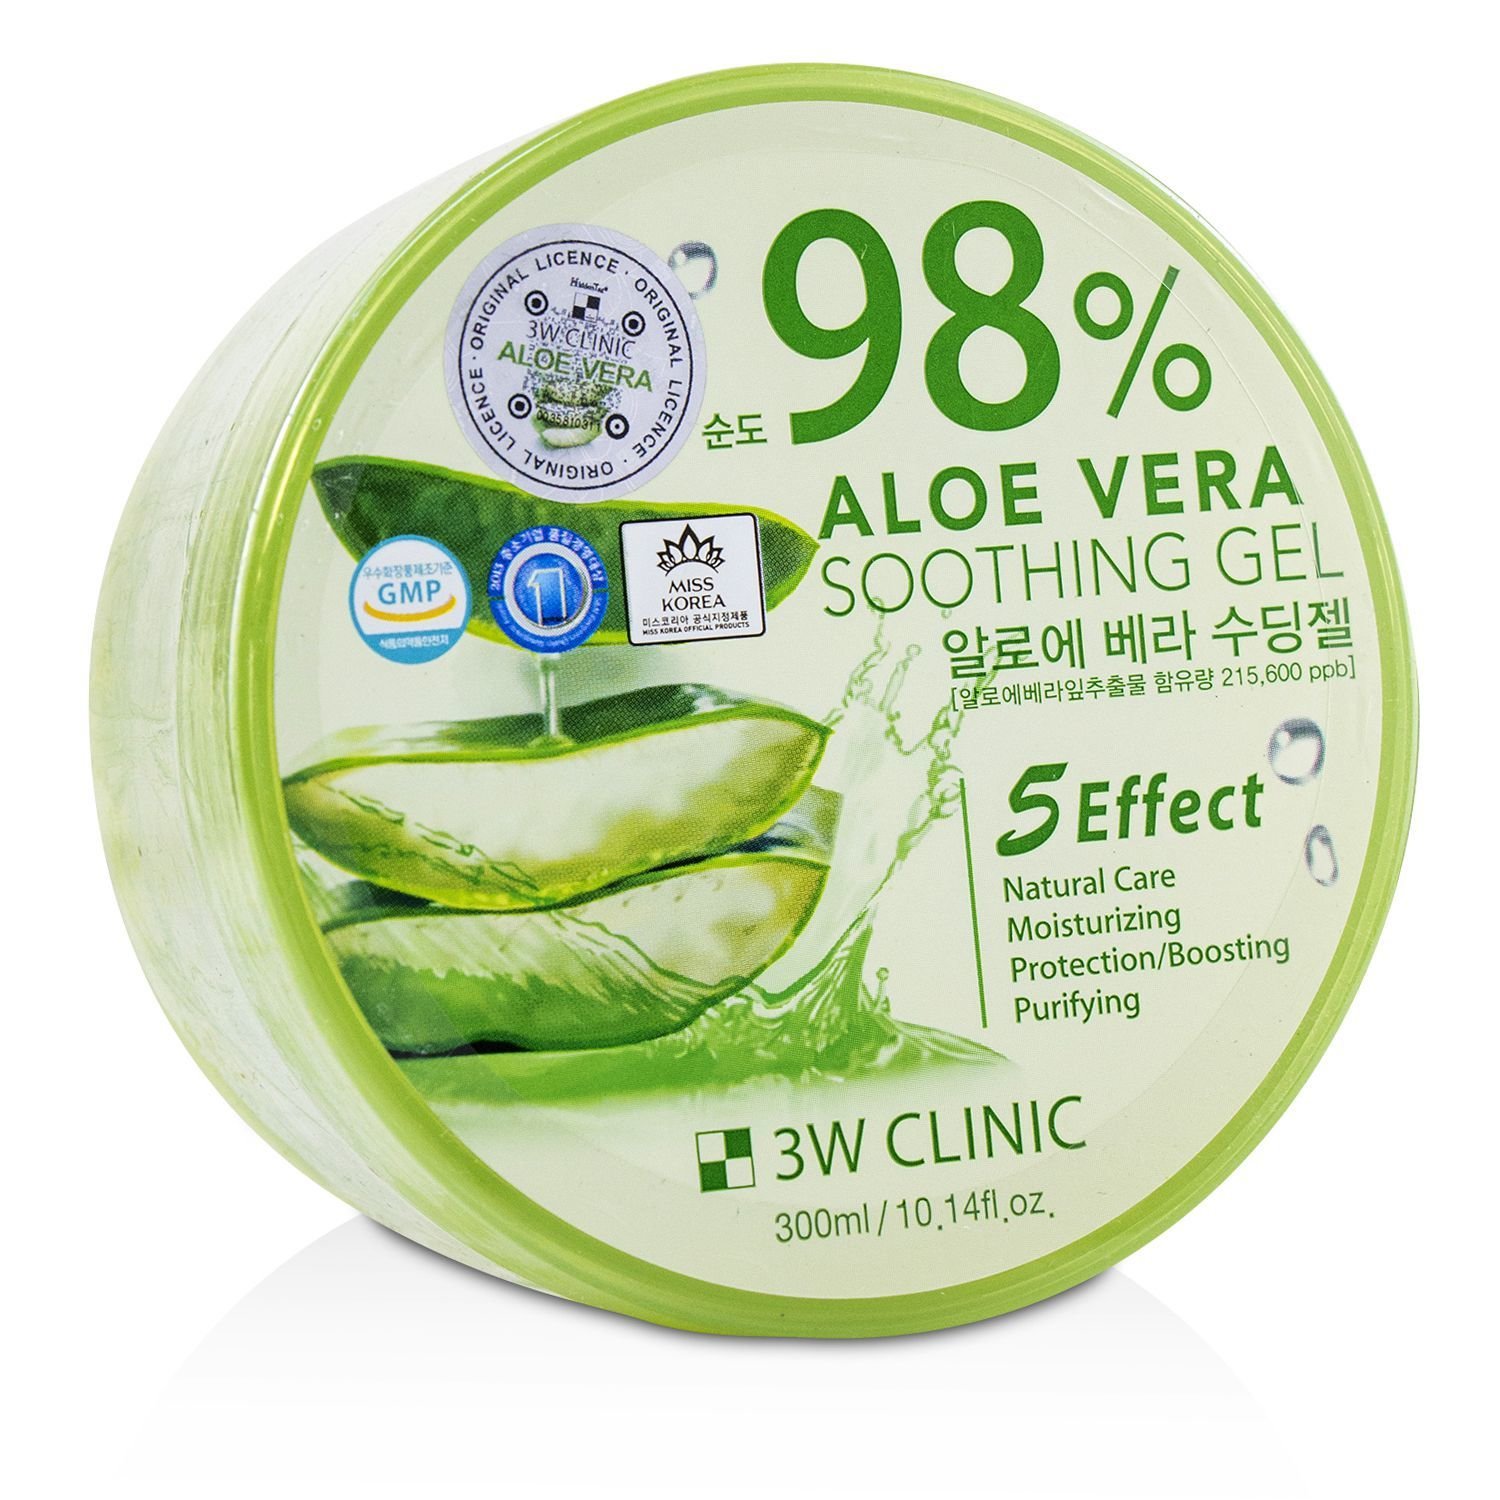 3W Clinic - 98% 蘆薈舒緩保濕凝凍 98% Aloe Vera Soothing Gel